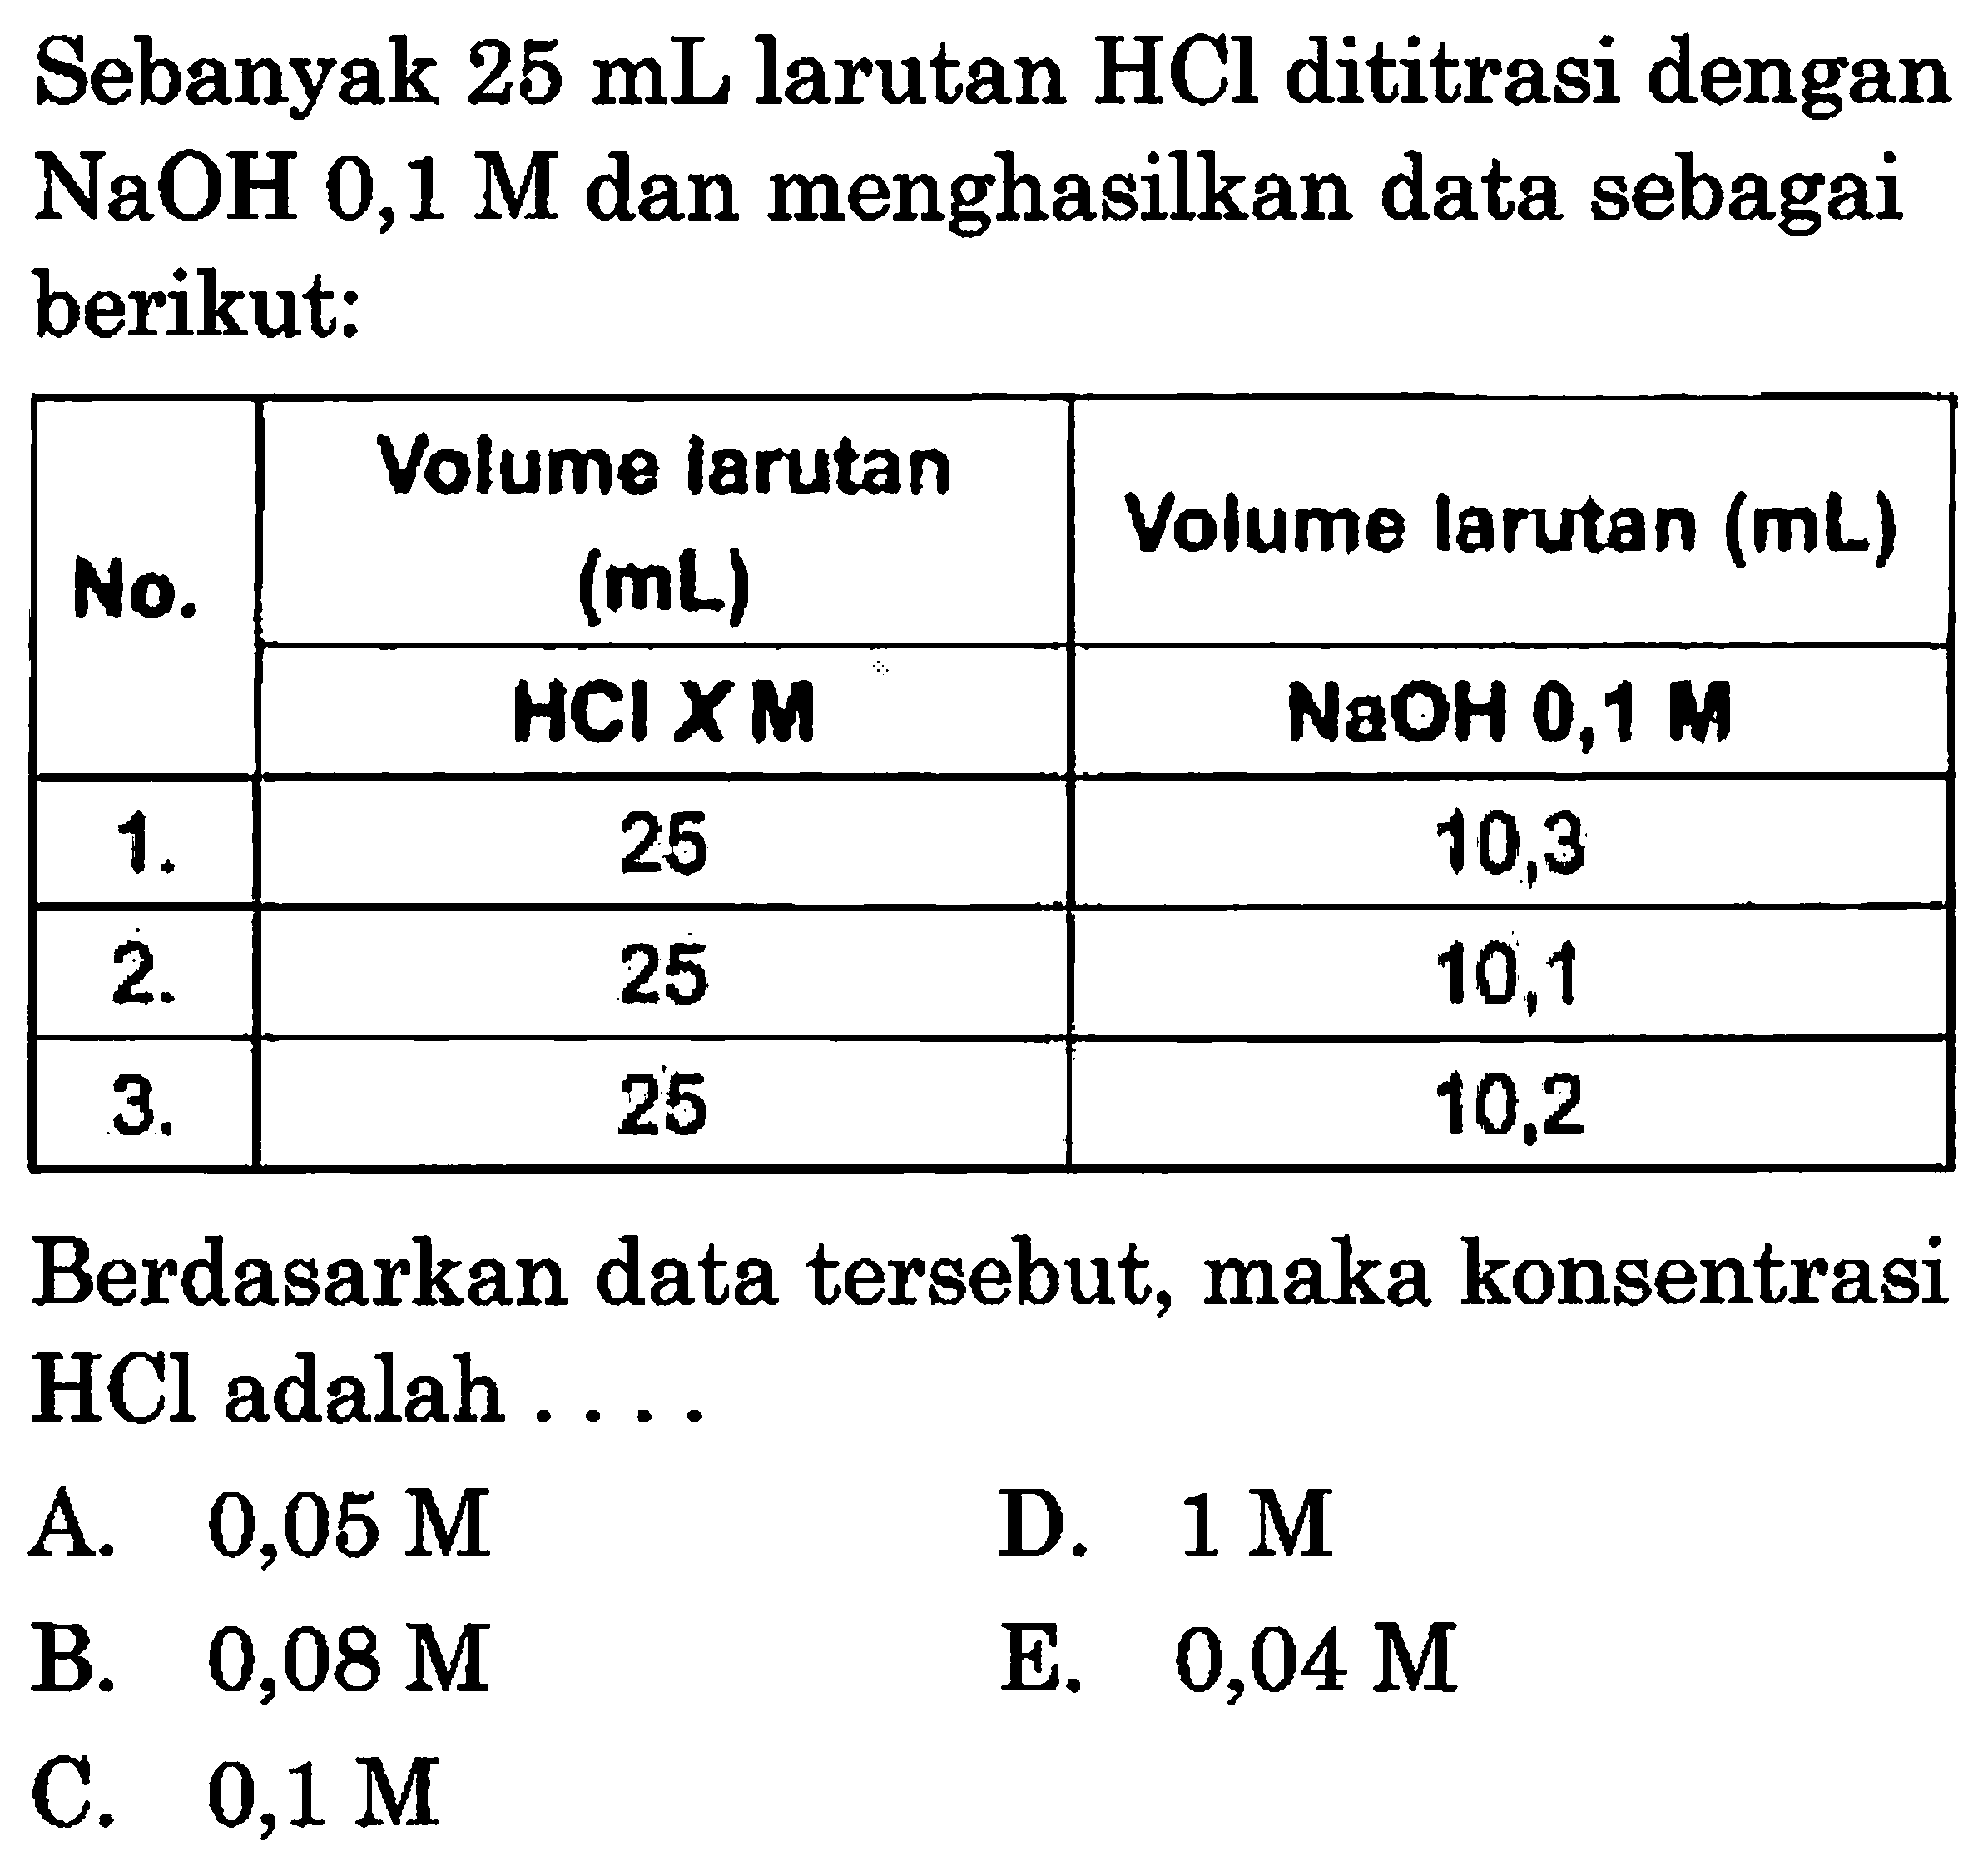 Sebanyak 25 mL larutan HCl dititrasi dengan NaOH 0,1 M dan menghasilkan data sebagai berikut: 
No. Volume Iarutan (mL) HCl X M Volume larutan (mL) NaOH 0,1 M 
1. 25 10,3 
2. 25 10,1 
3. 25 10,2 
Berdasarkan data tersebut, maka konsentrasi HCl adalah 
